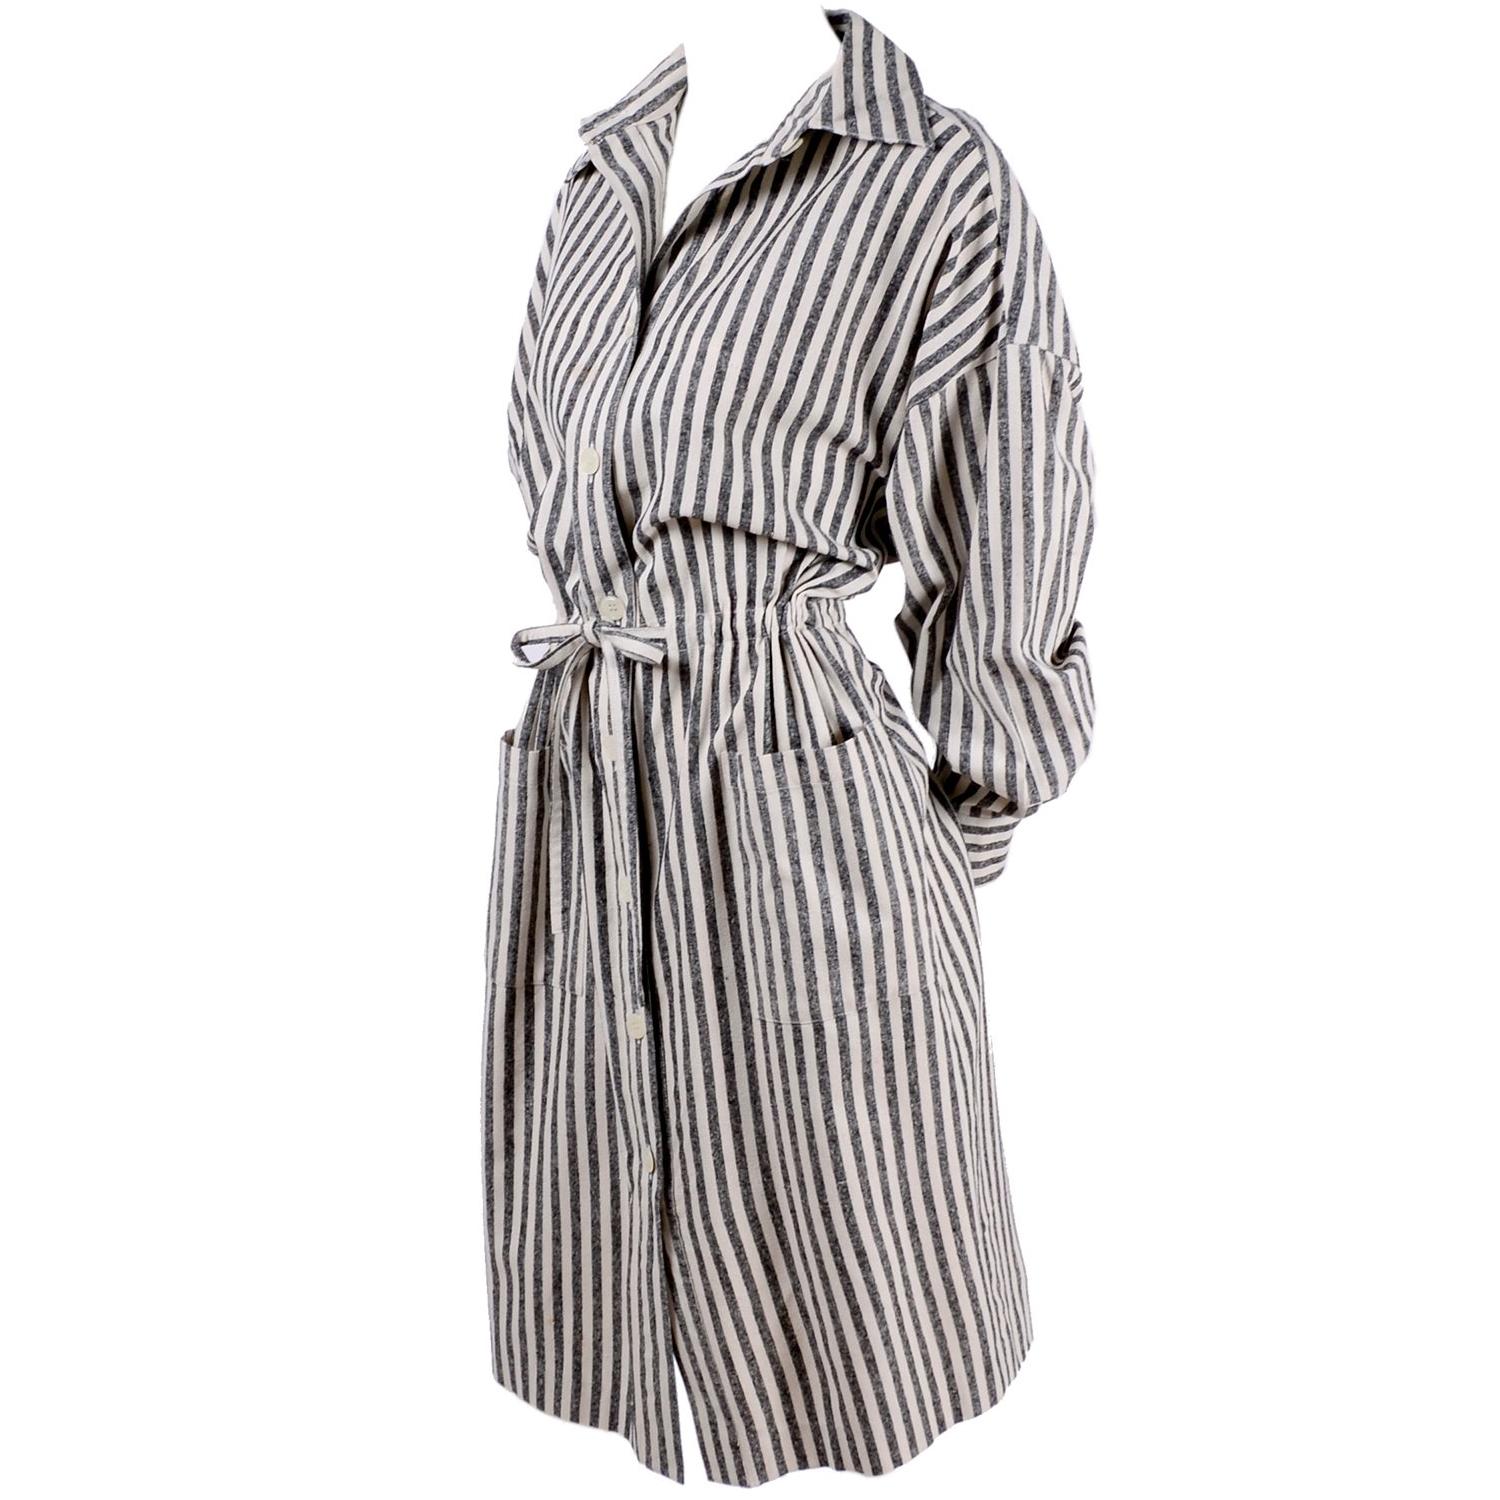 Vintage Oleg Cassini Raw Silk Dress in Gray & White Stripes w/ Drawstring Waist 